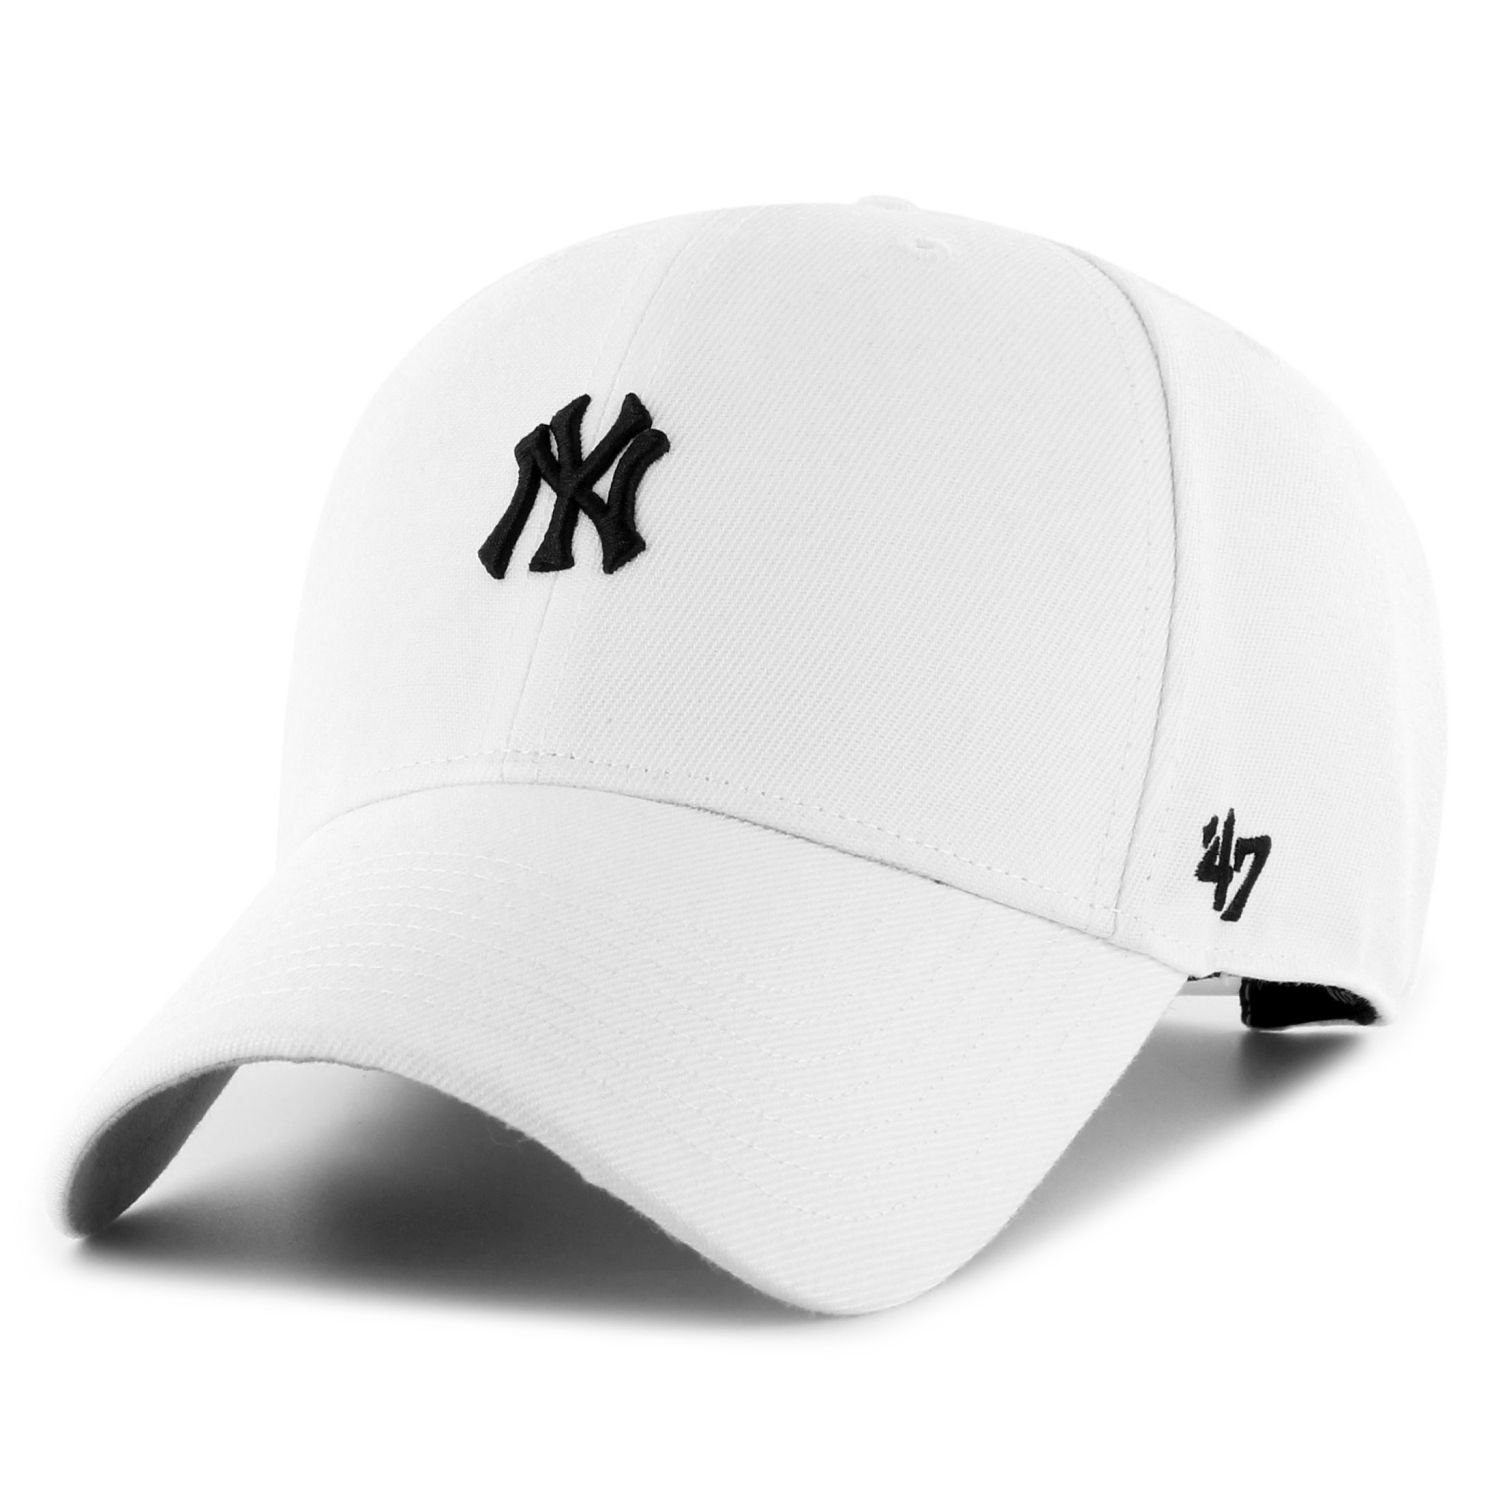 BASE '47 RUNNER York Snapback Cap New Brand Yankees